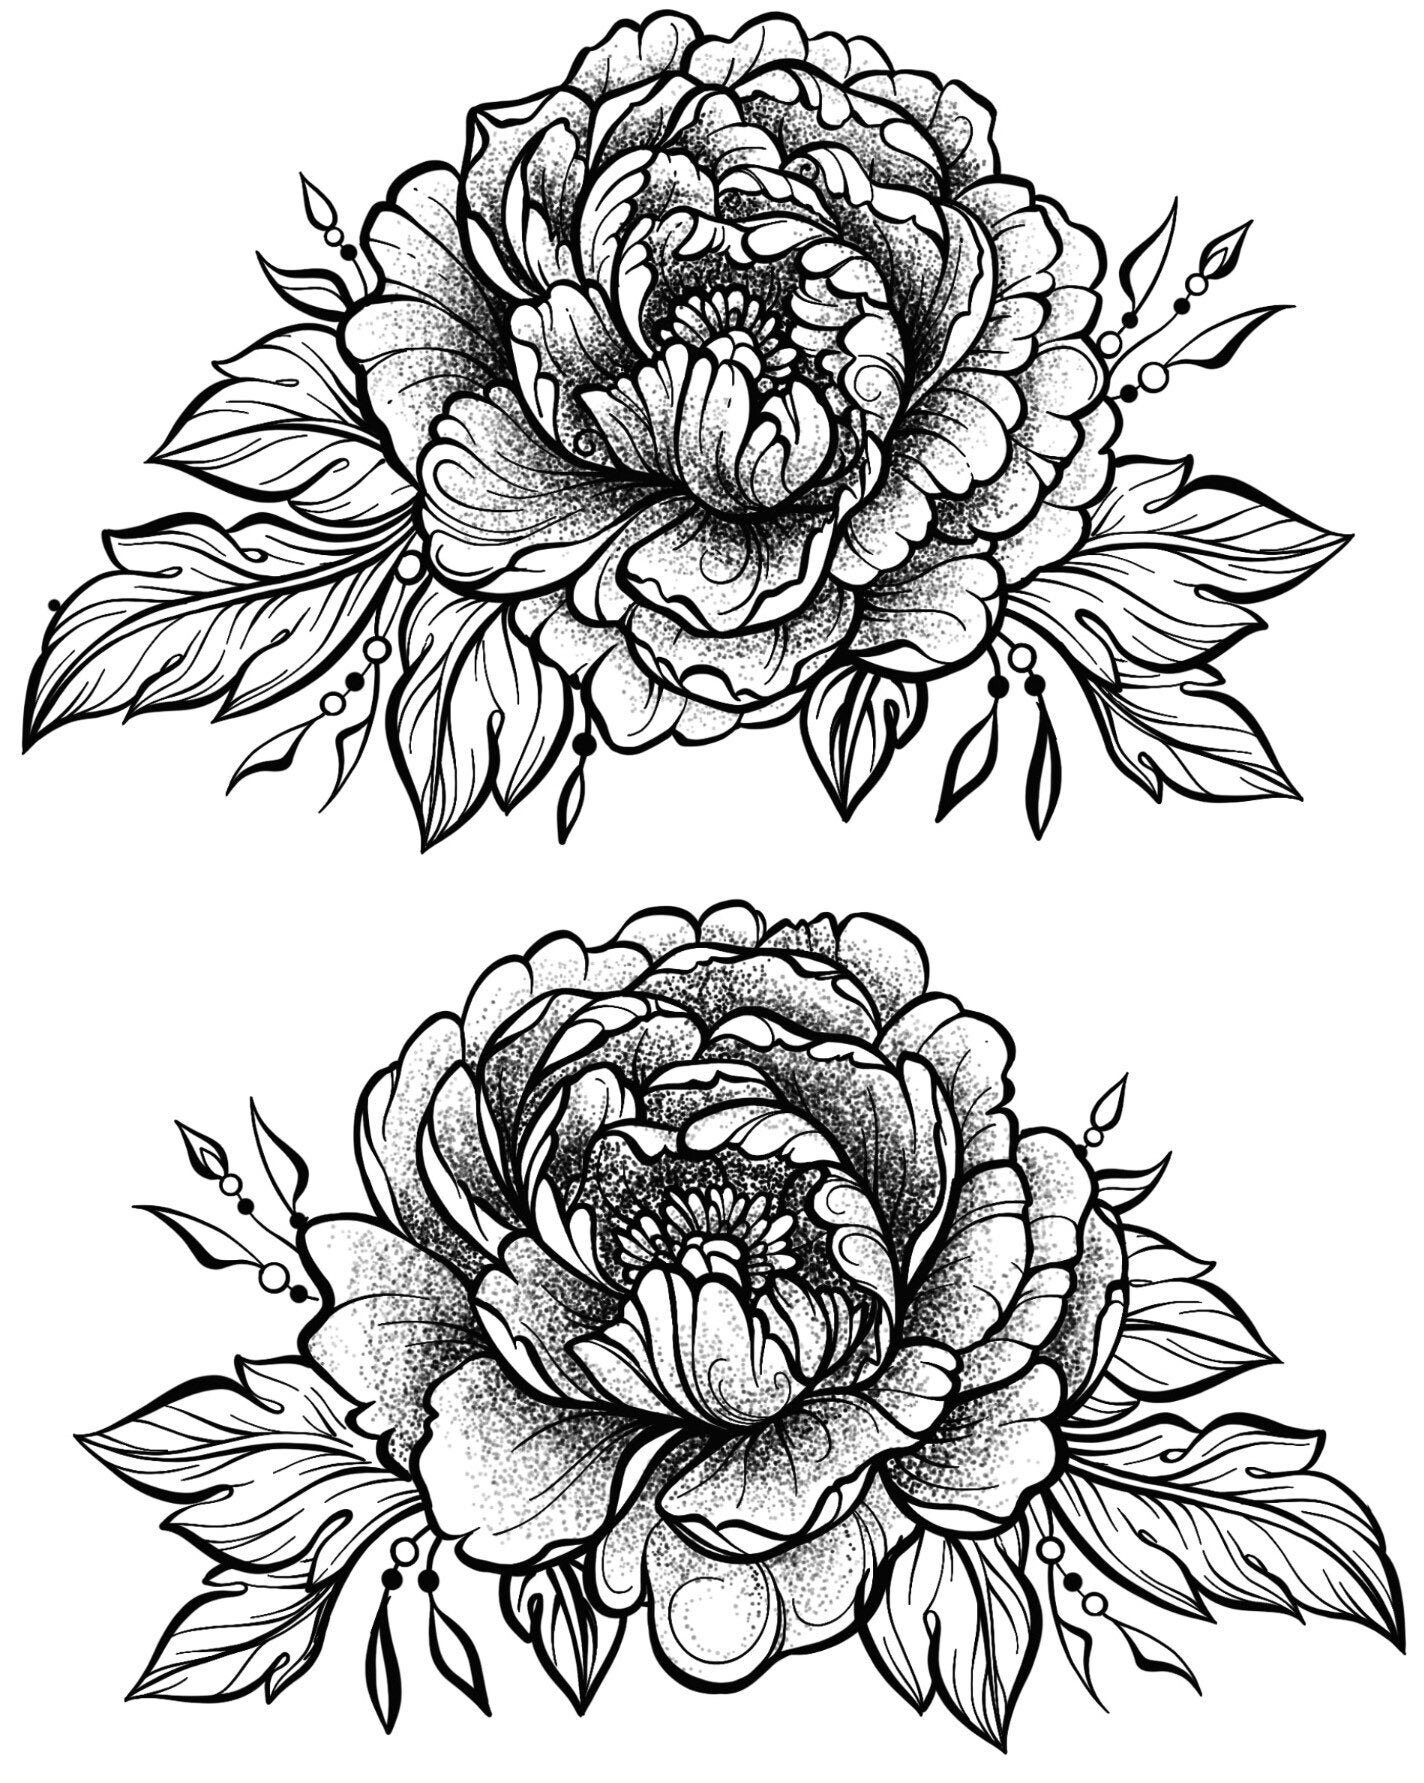 Temporary Tattoos 2 big flowers peony tattoo flash | Etsy